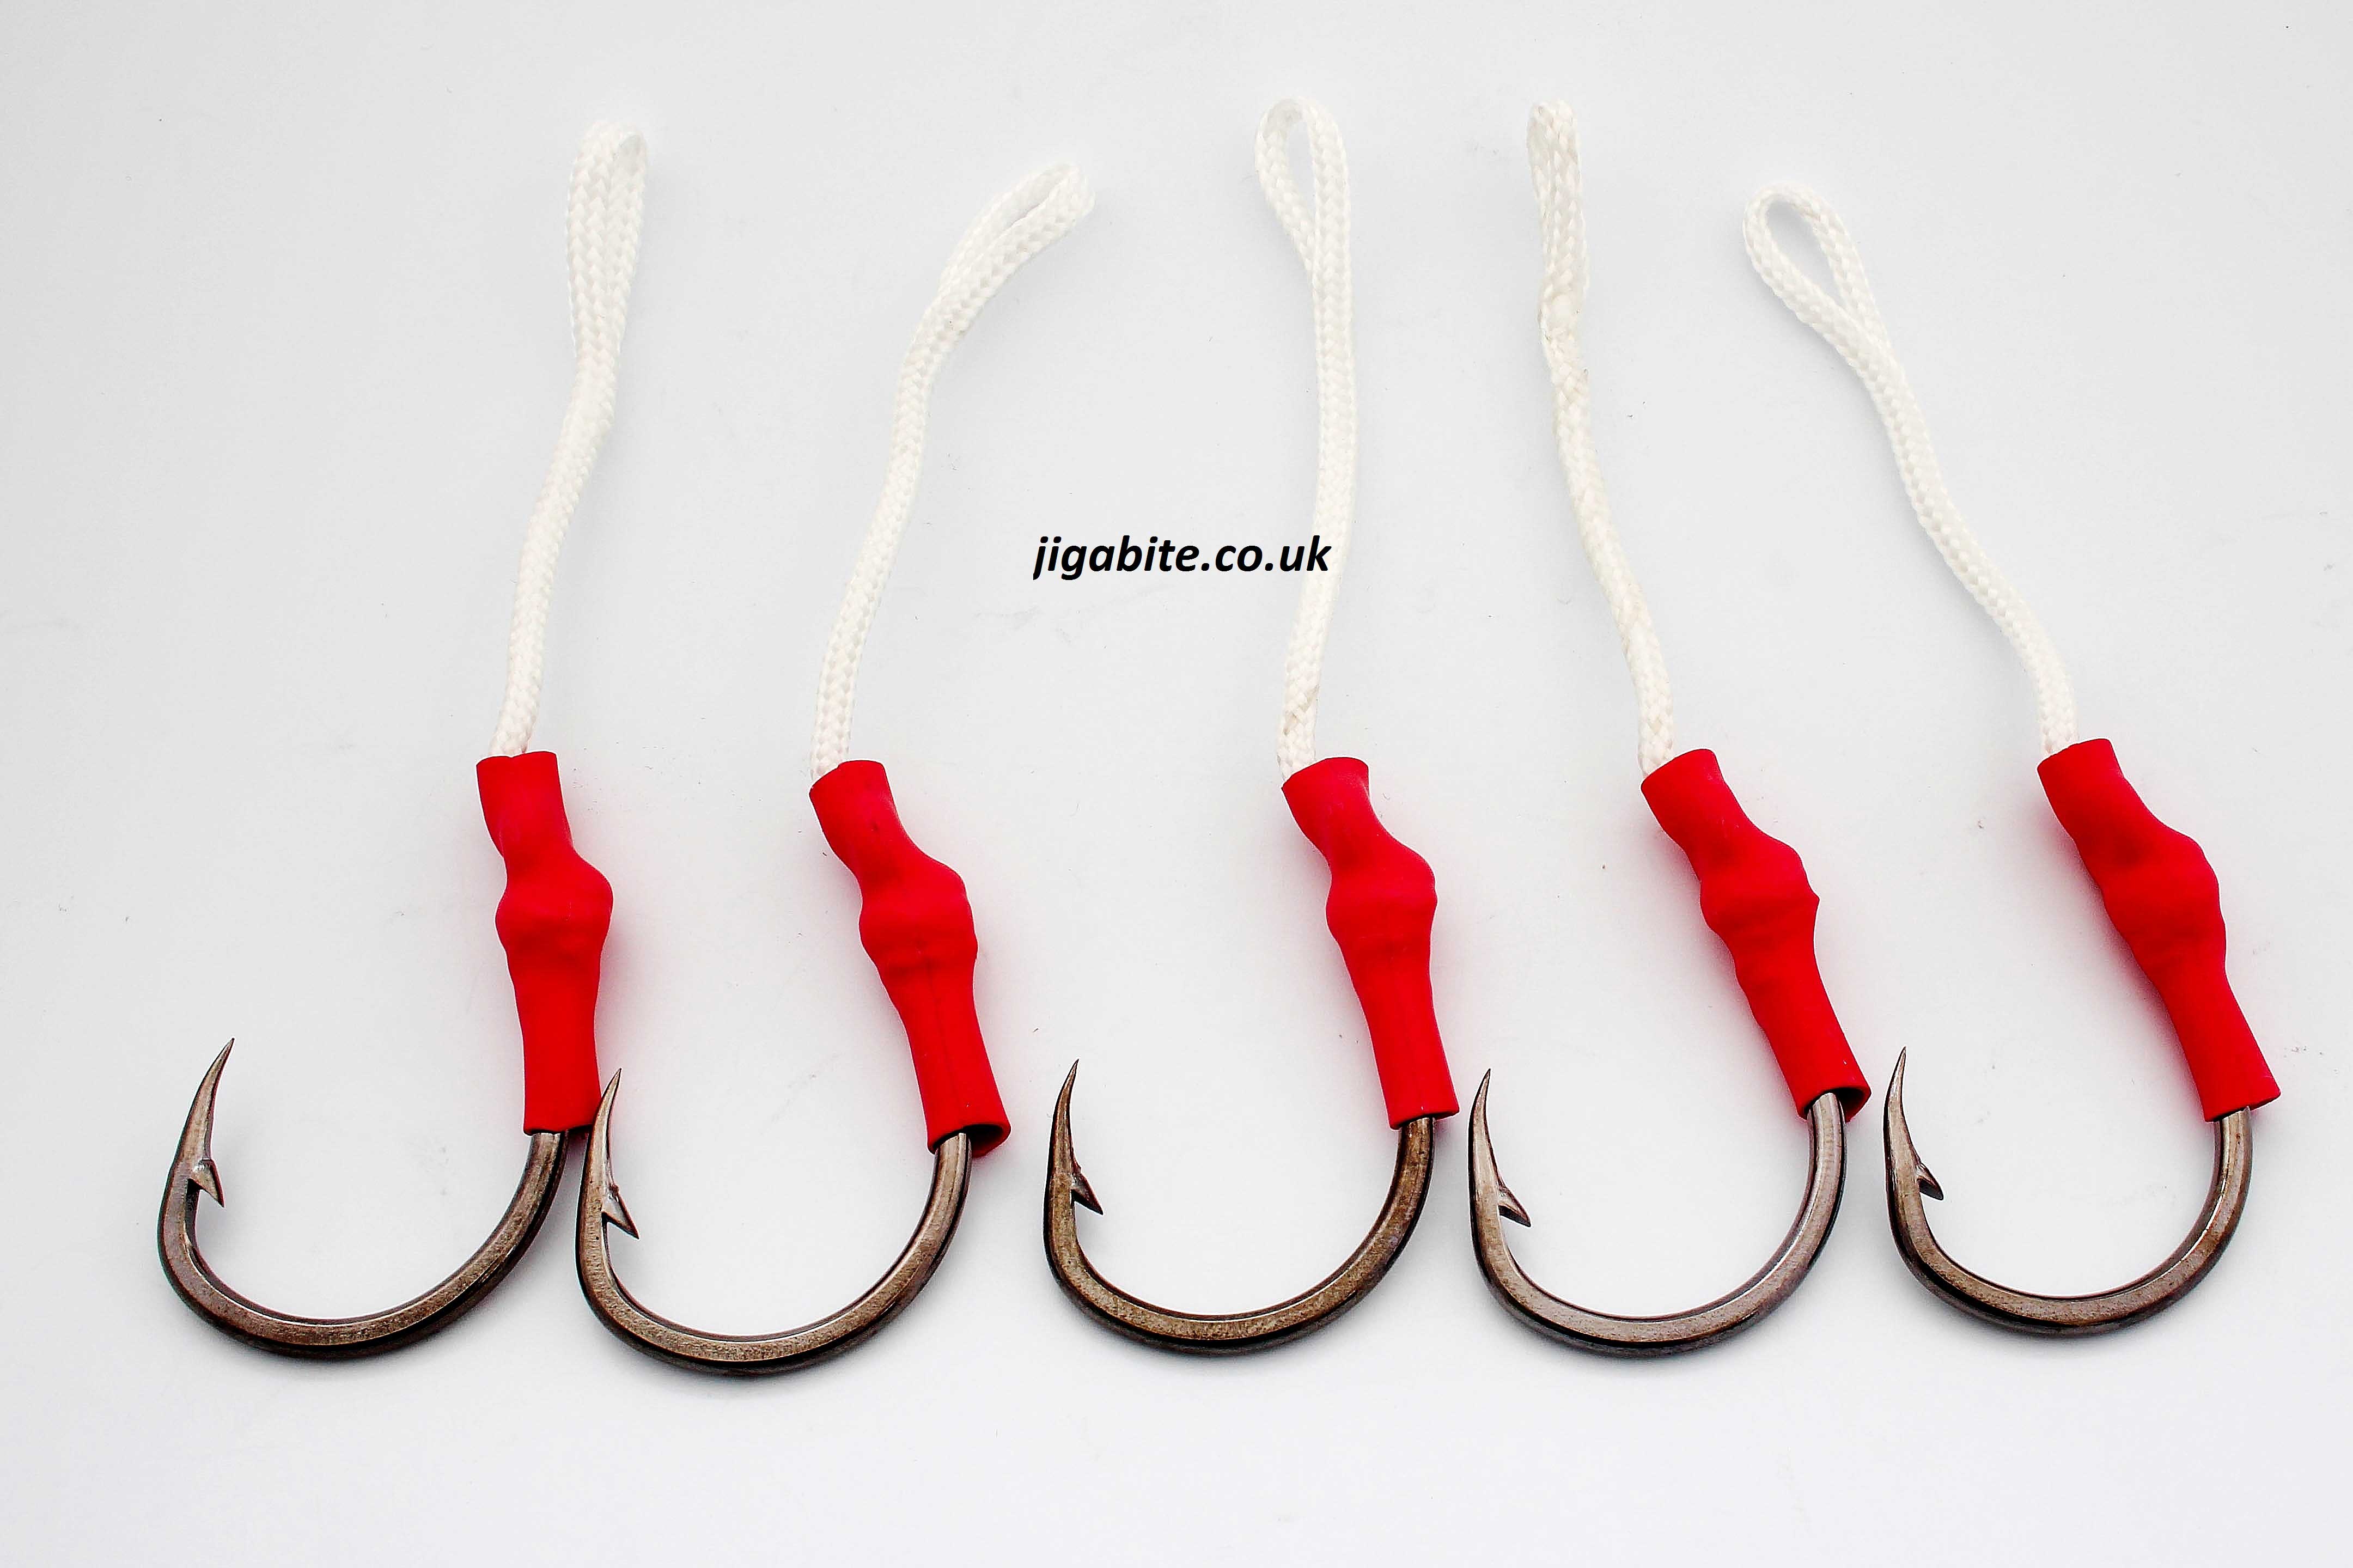 Assist Hooks - Spectra Assists - Jigging -  Fishing Jigs